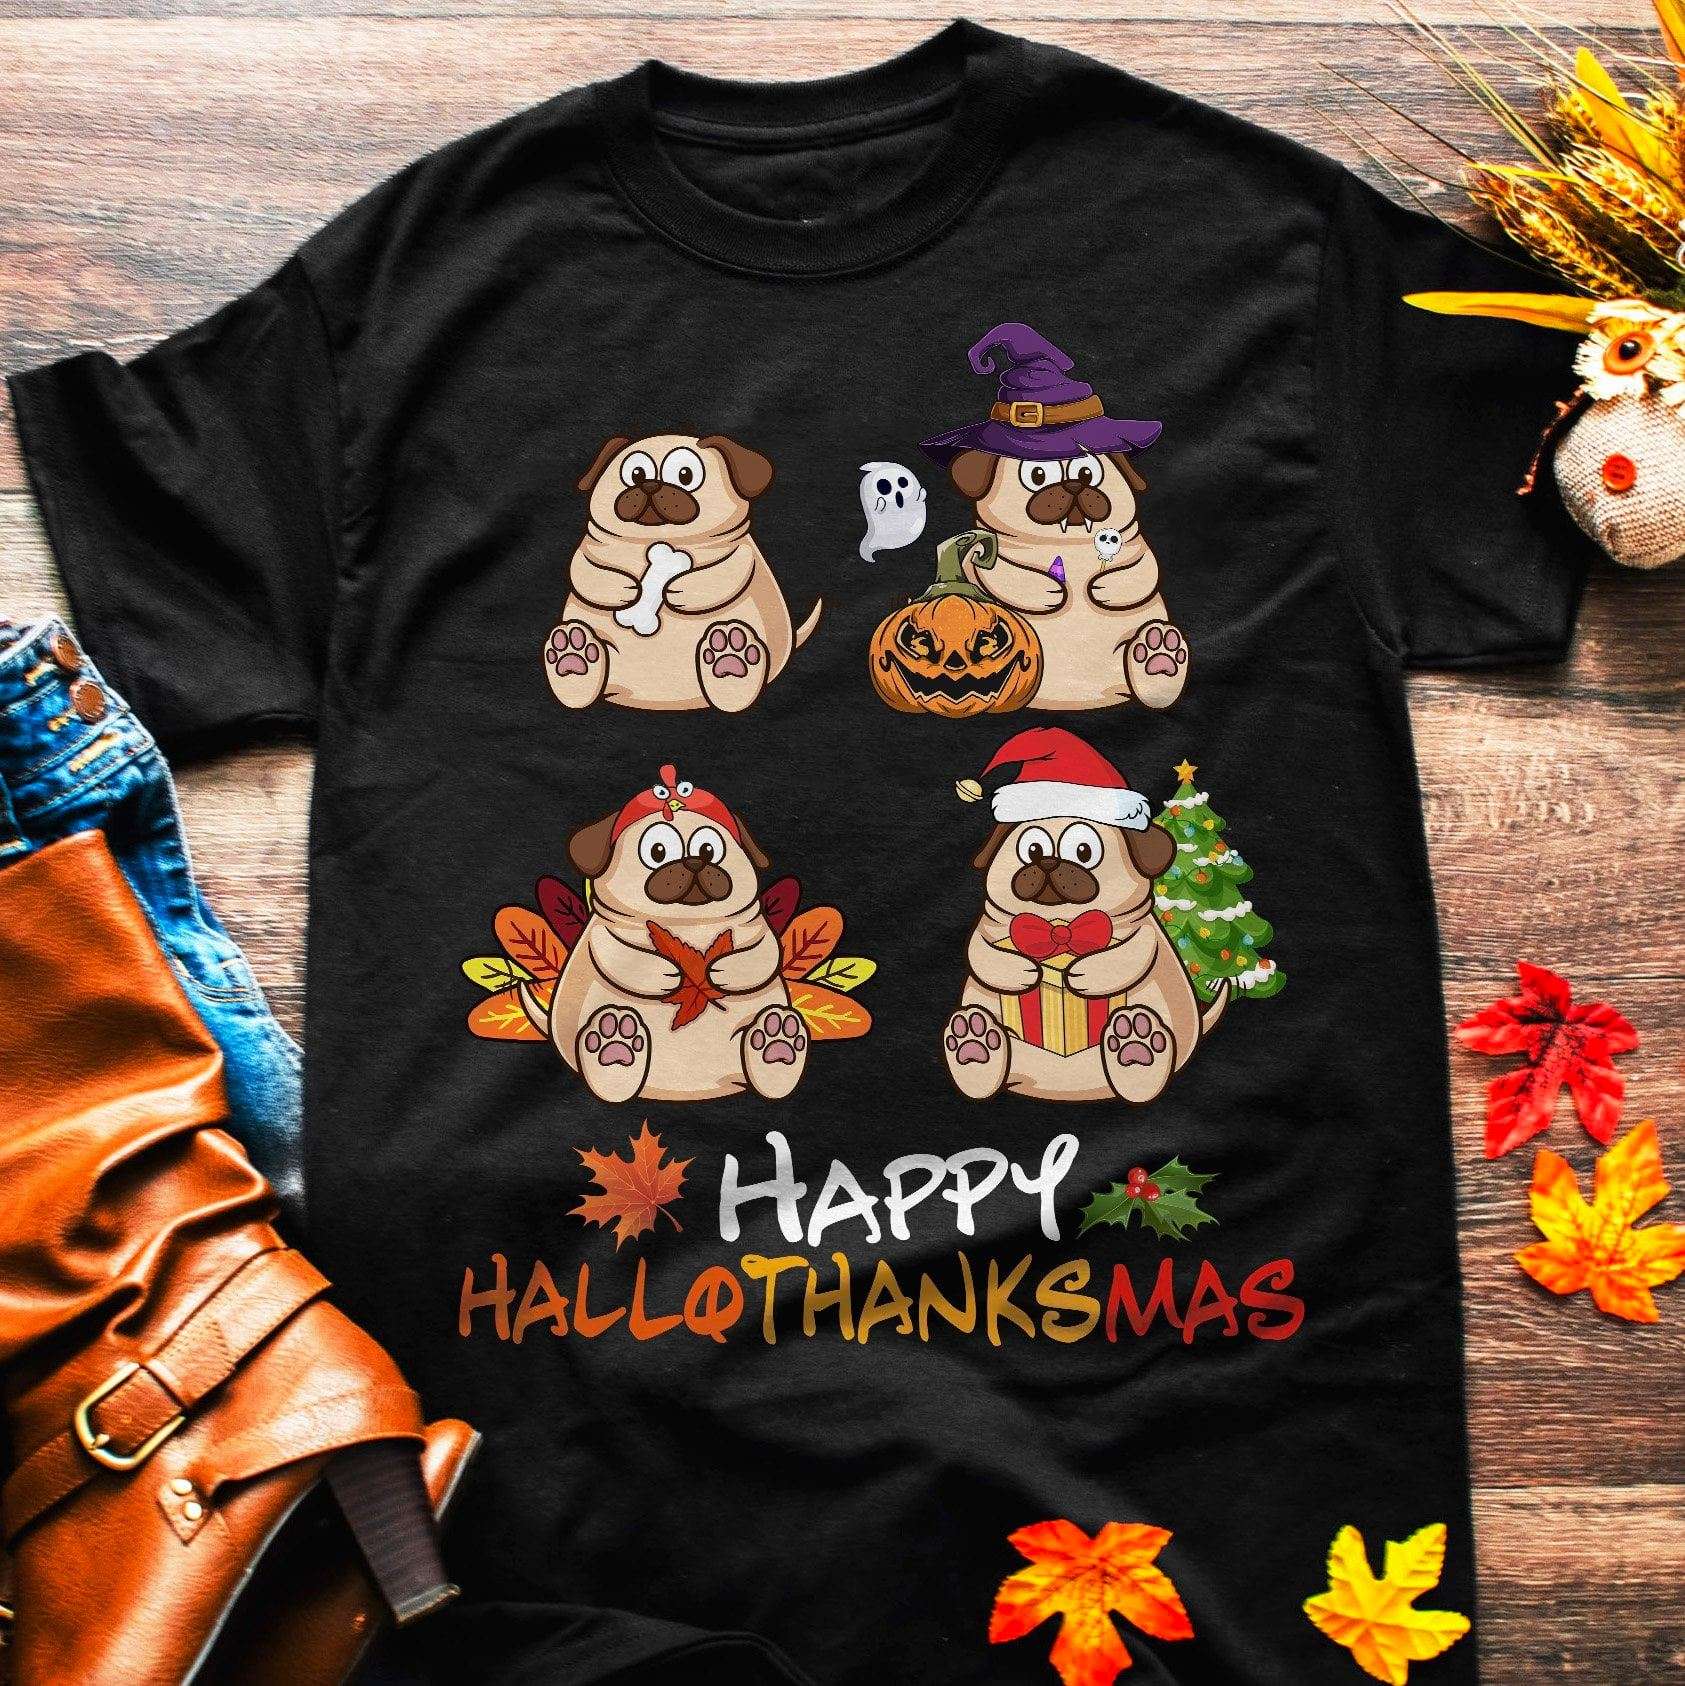 Happy HalloThanksMas - Pug dog witch, Happy Halloween, Merry Christmas